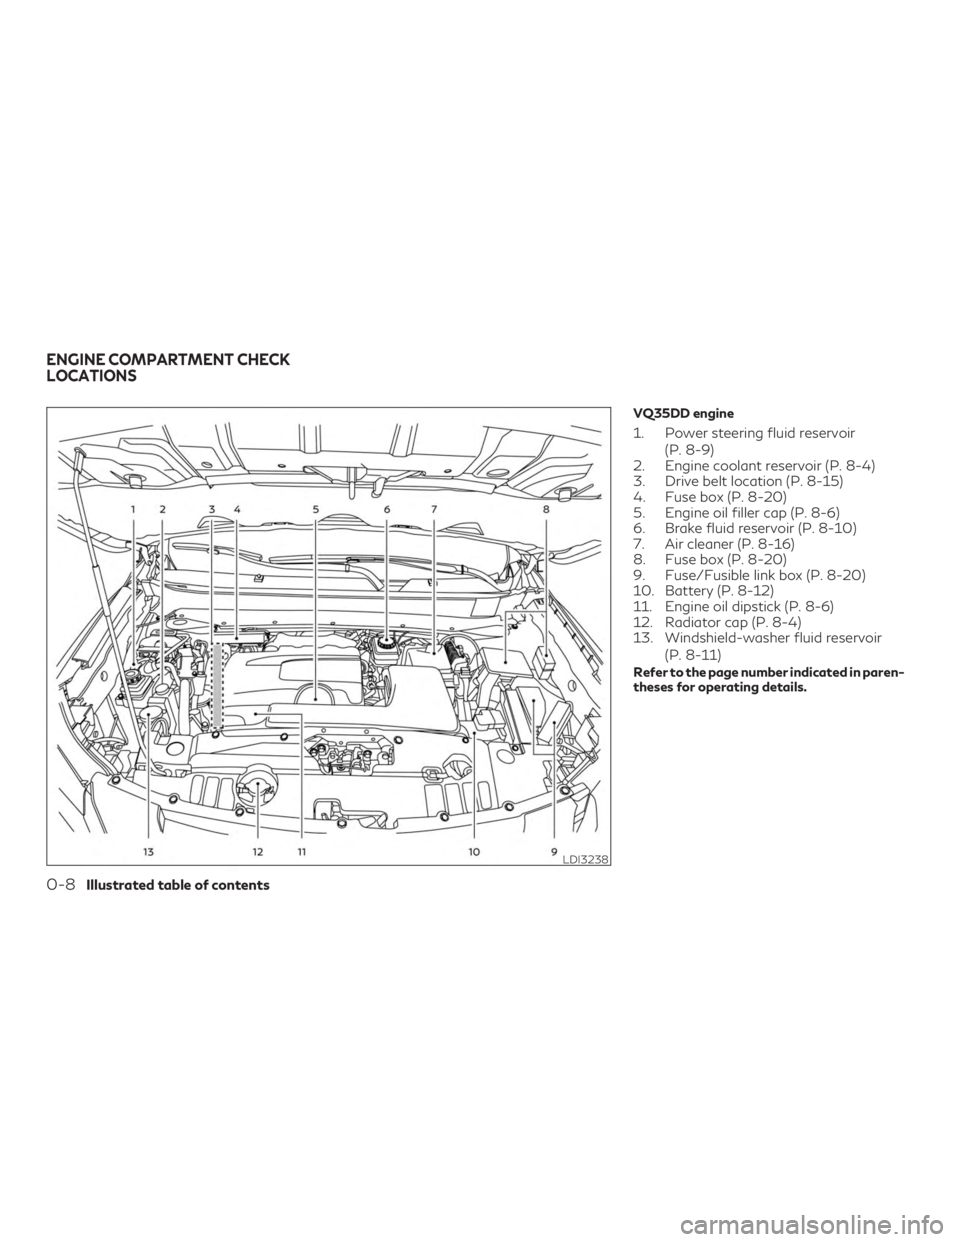 INFINITI QX60 2019  Owners Manual VQ35DD engine
1. Power steering fluid reservoir(P. 8-9)
2. Engine coolant reservoir (P. 8-4)
3. Drive belt location (P. 8-15)
4. Fuse box (P. 8-20)
5. Engine oil filler cap (P. 8-6)
6. Brake fluid res